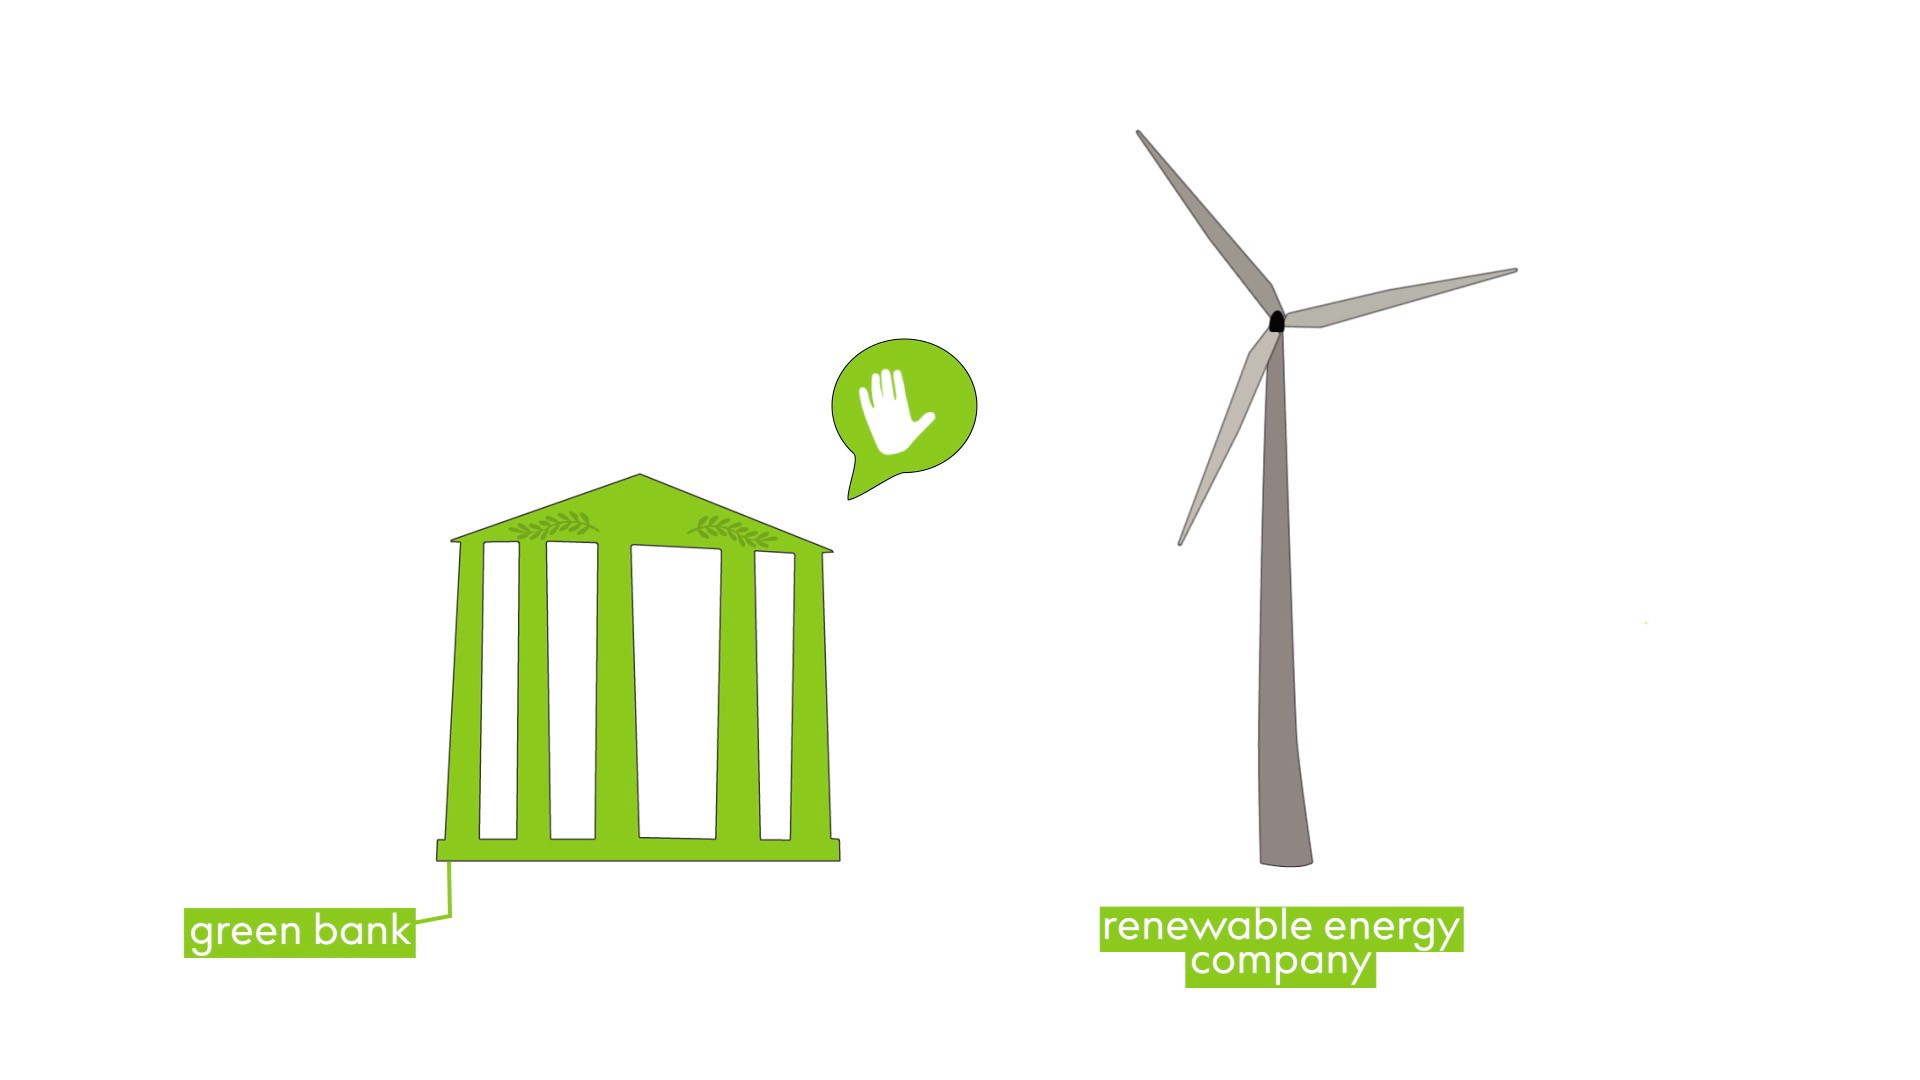 green bank and renewable energy company draw